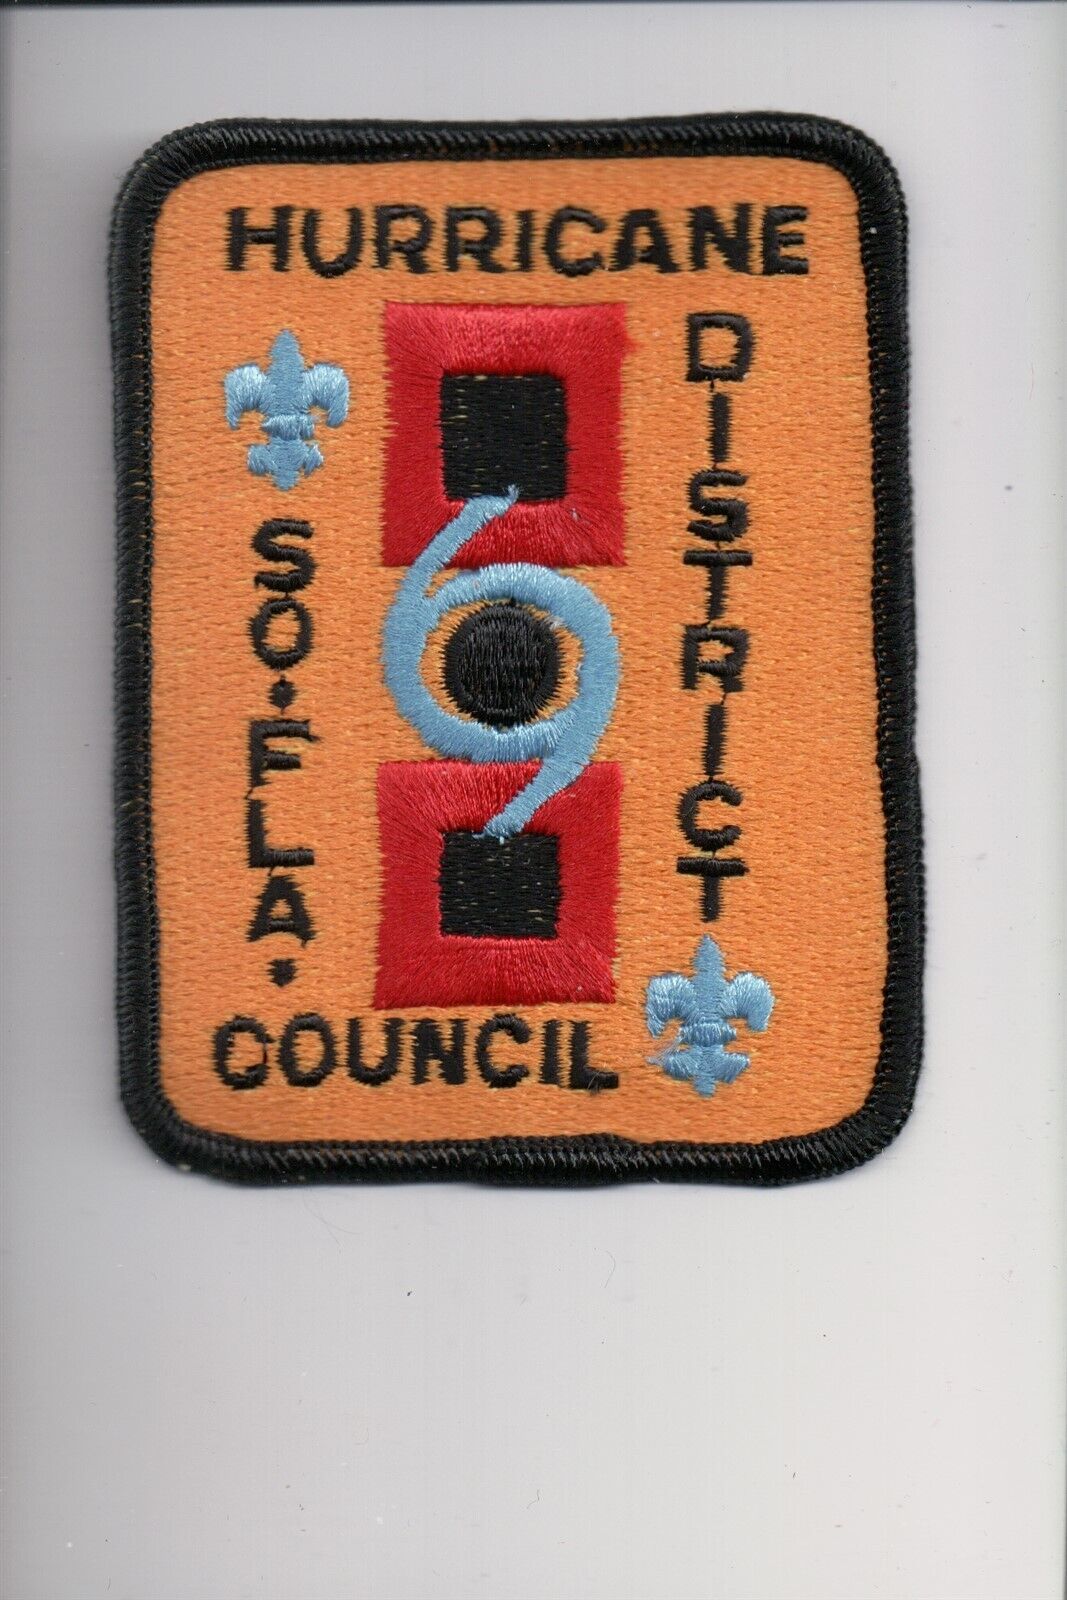 1969 South Florida Council Hurricane District patch